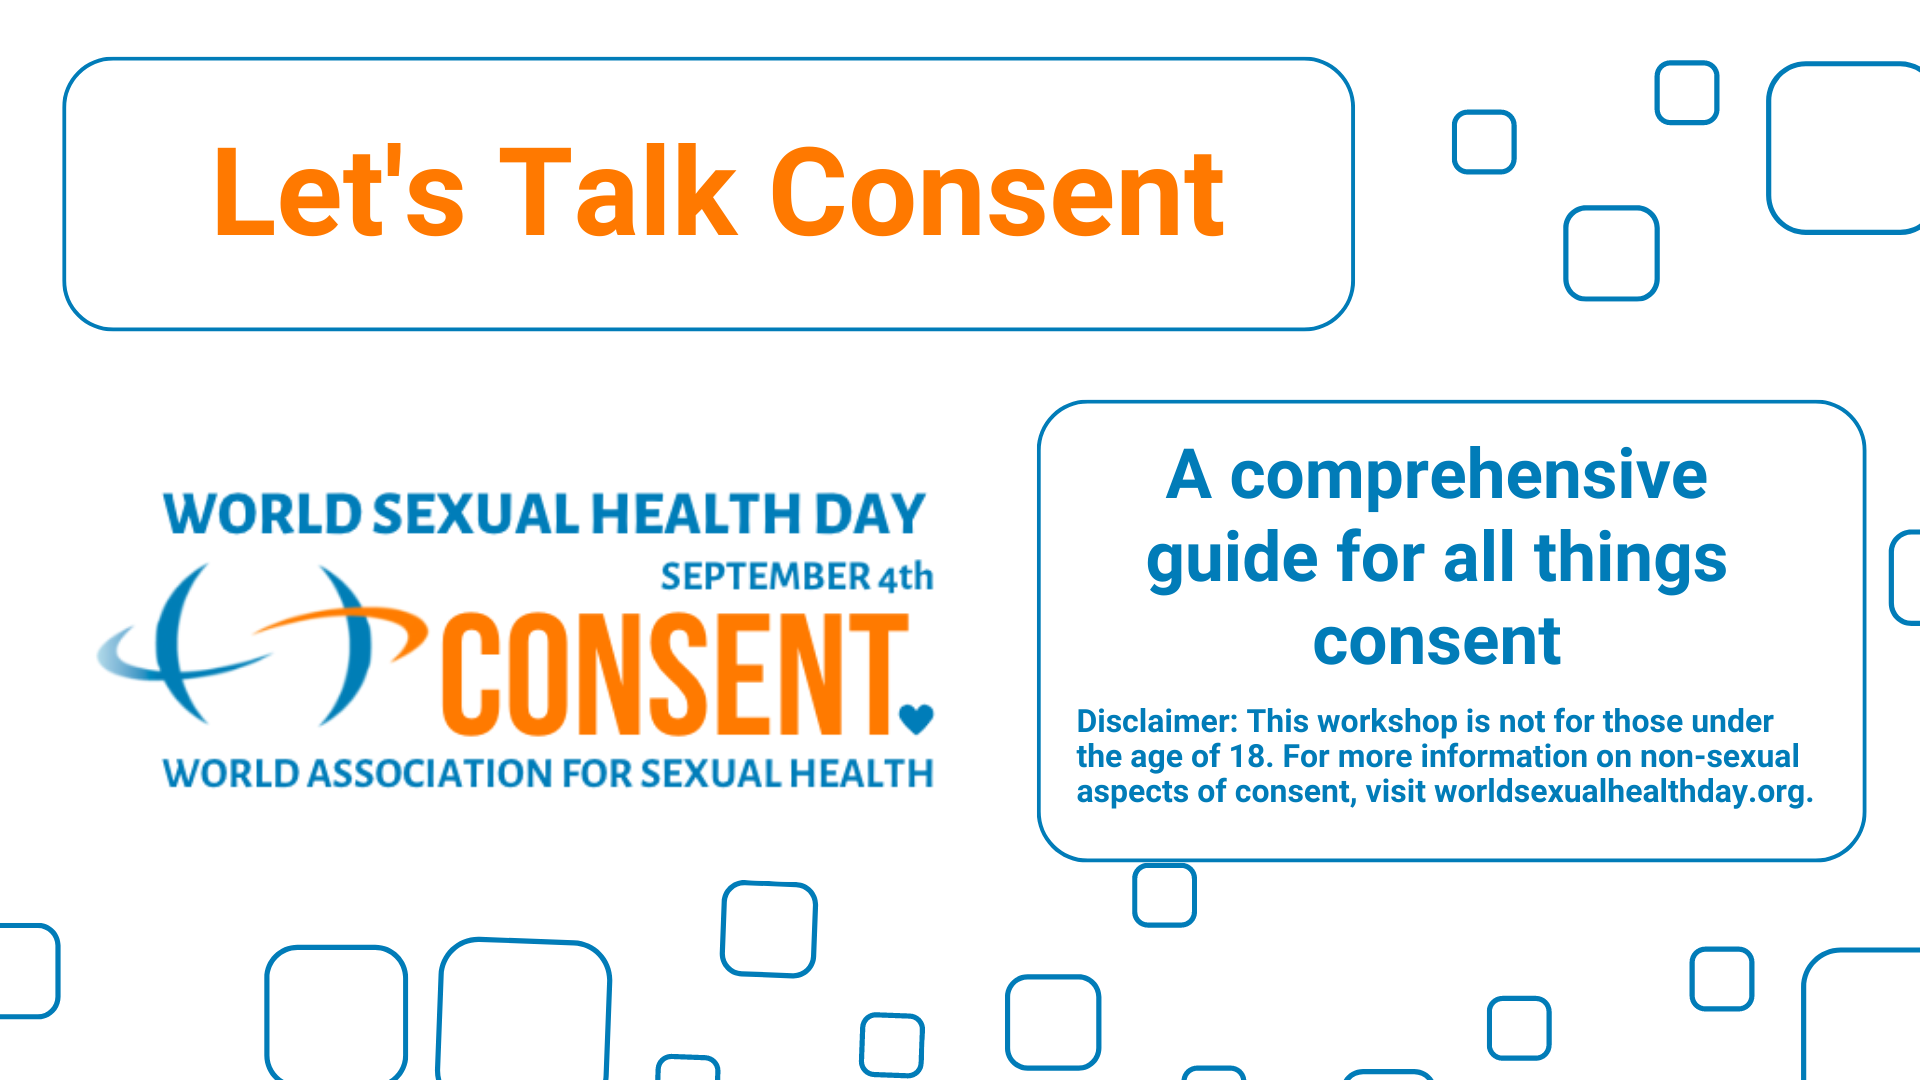 Let's Talk Consent